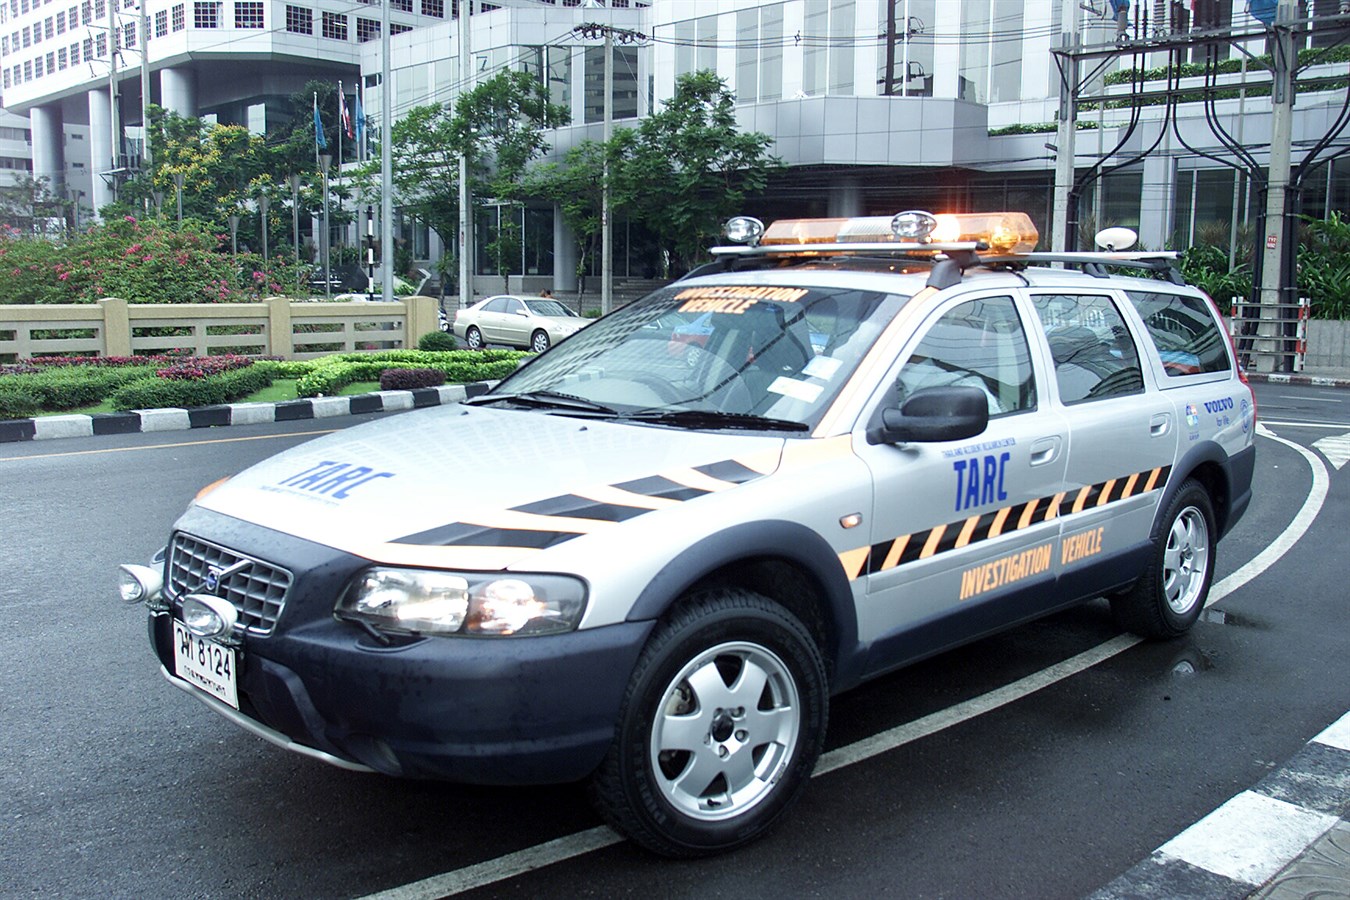 The TARC investigation vehicle, city